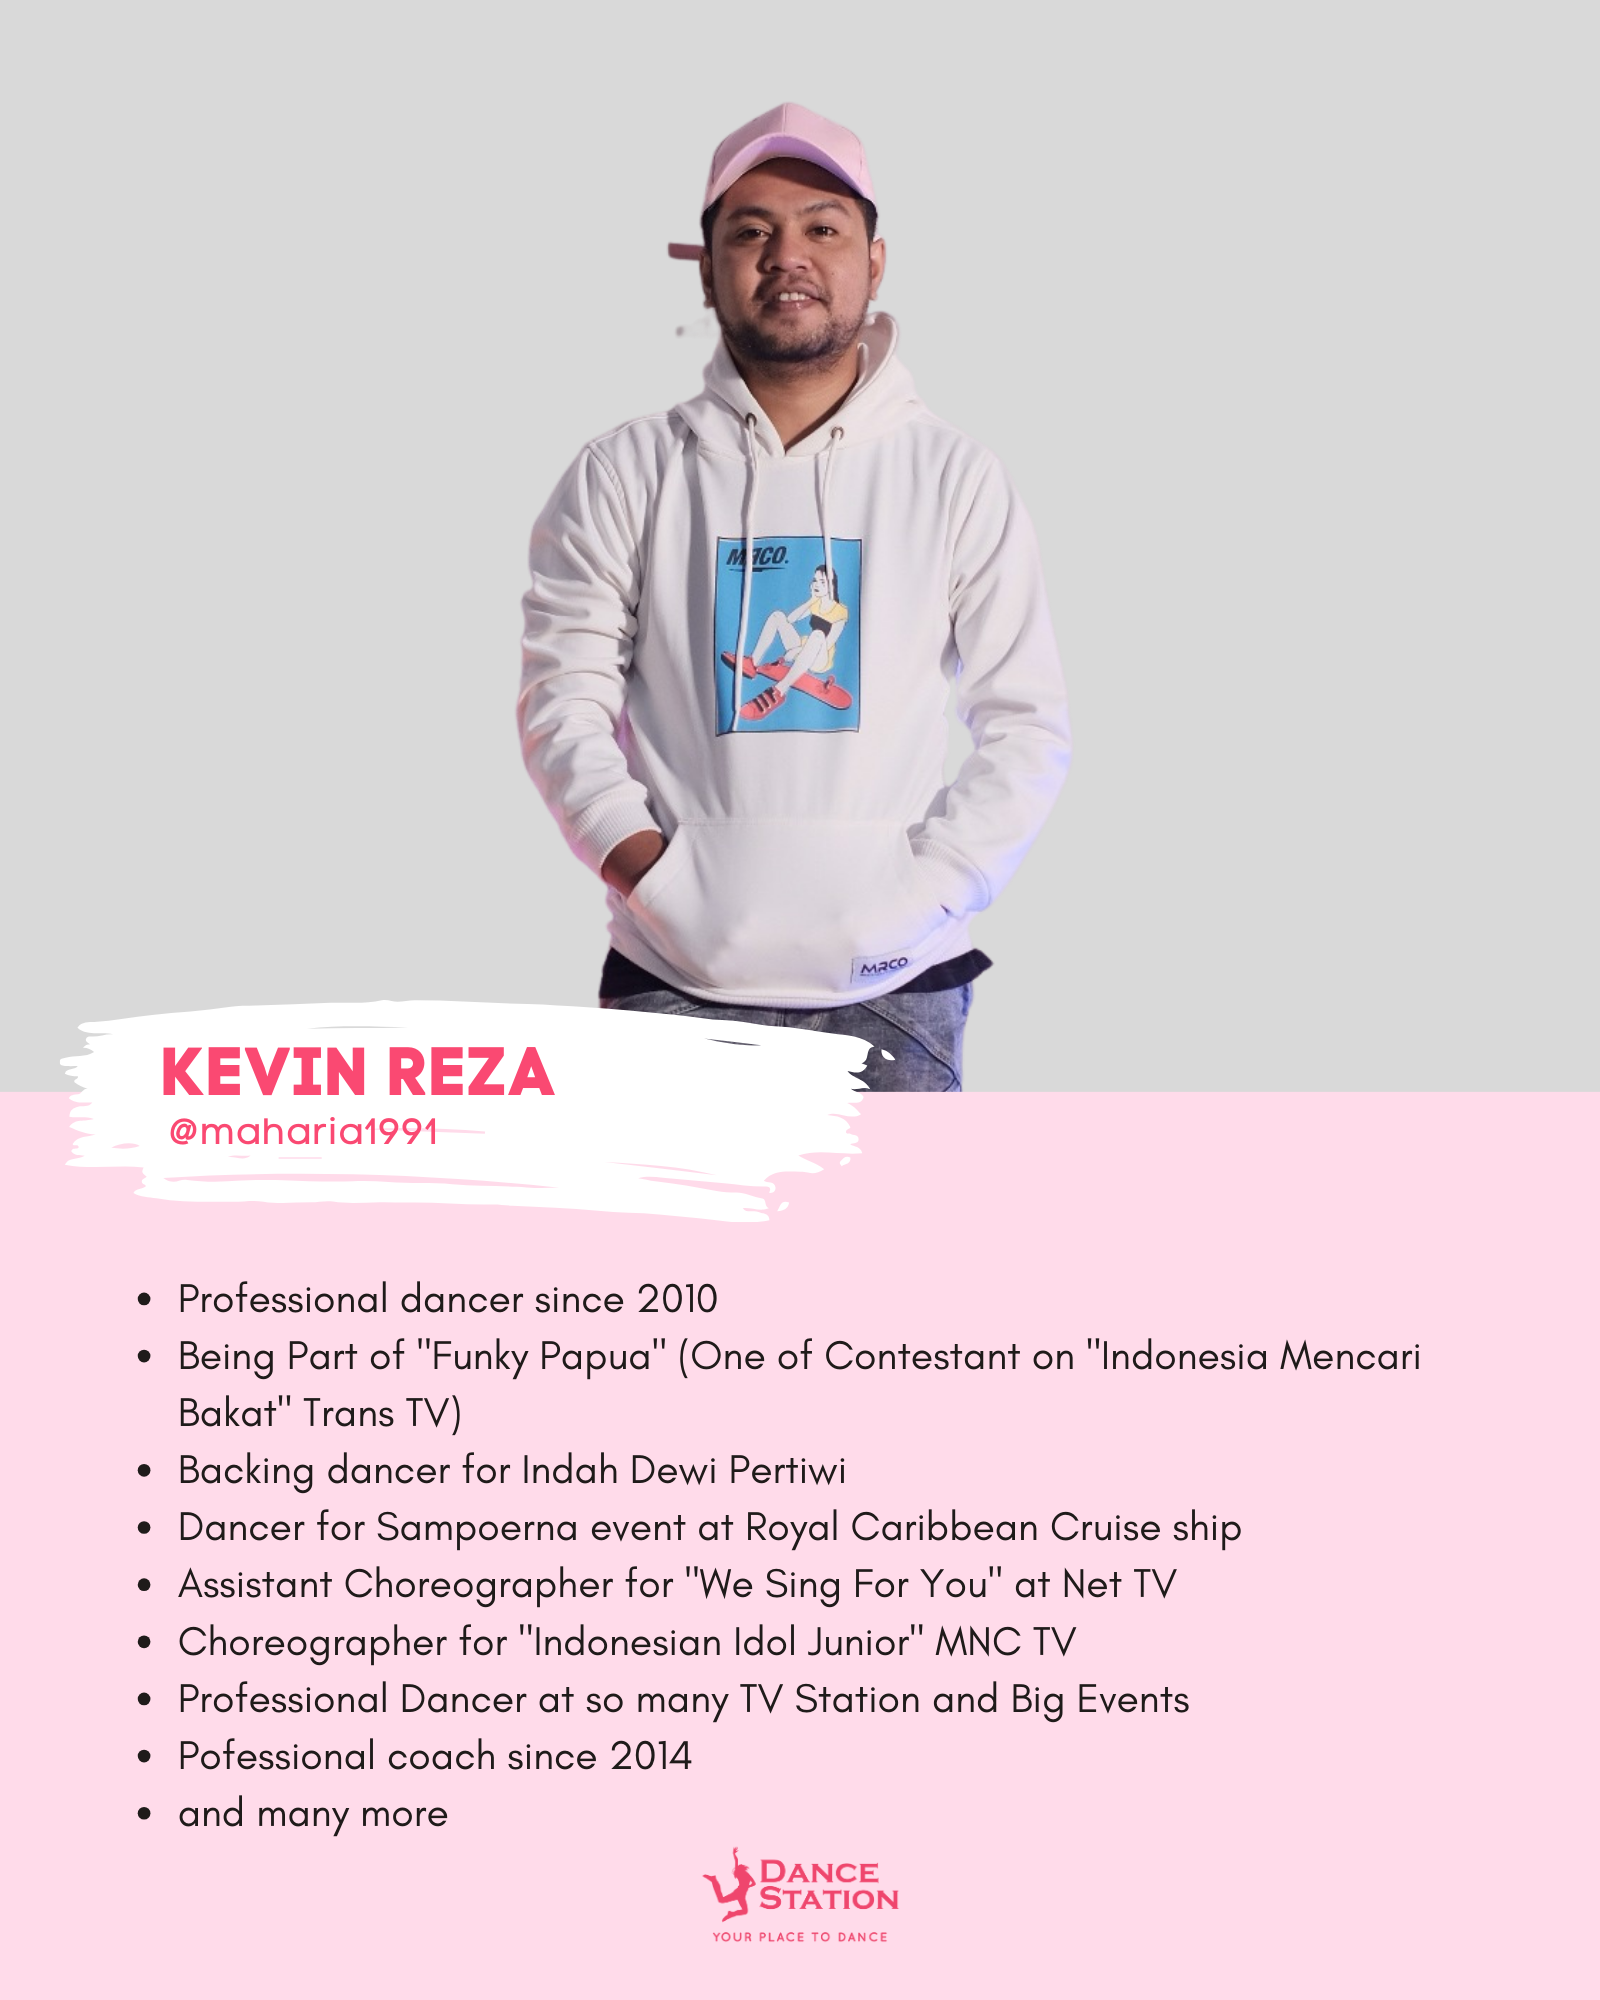 KEVIN REZA (MR. Kevin)